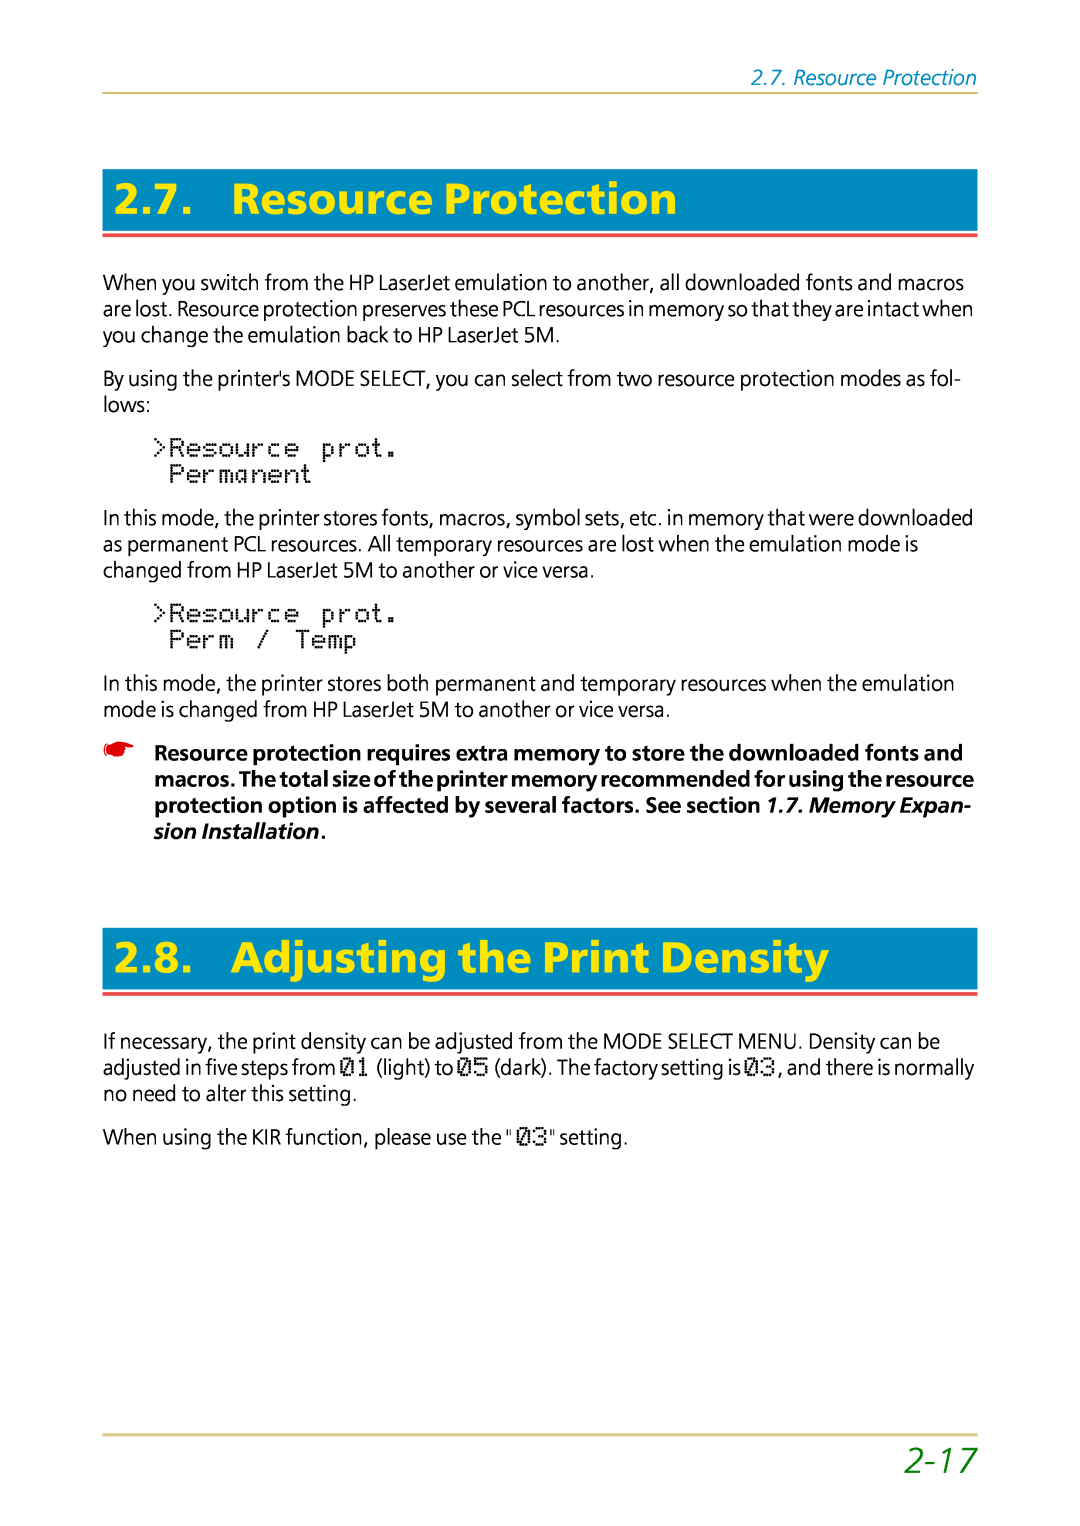 Kyocera FS-1700 user manual Resource Protection, Adjusting the Print Density, 2-17 